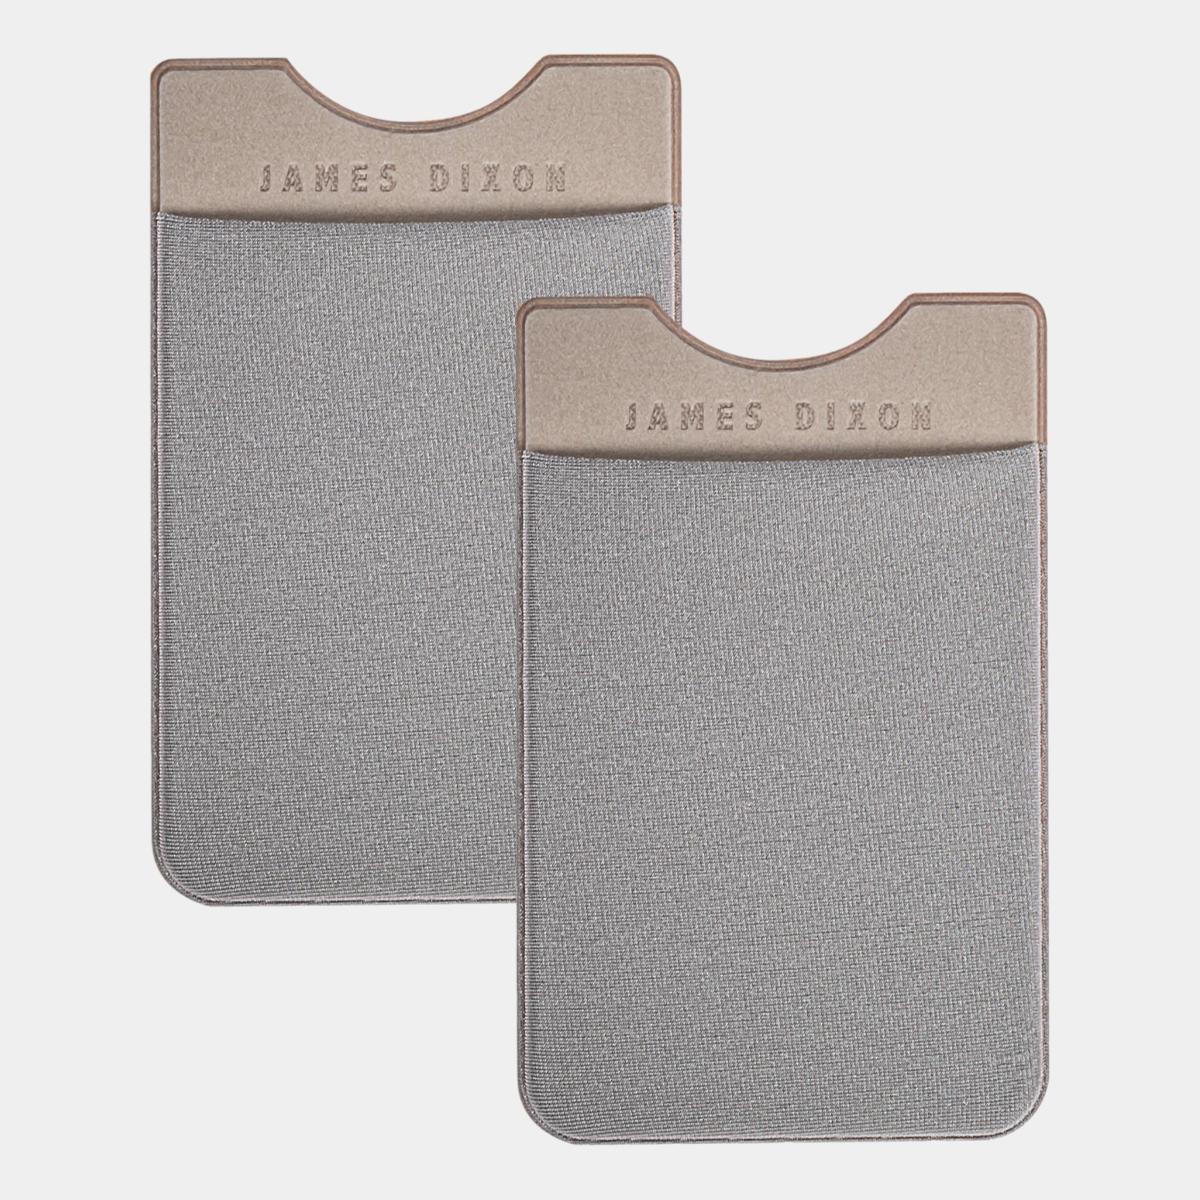 jd0070 james dixon extra cards grey pocket front